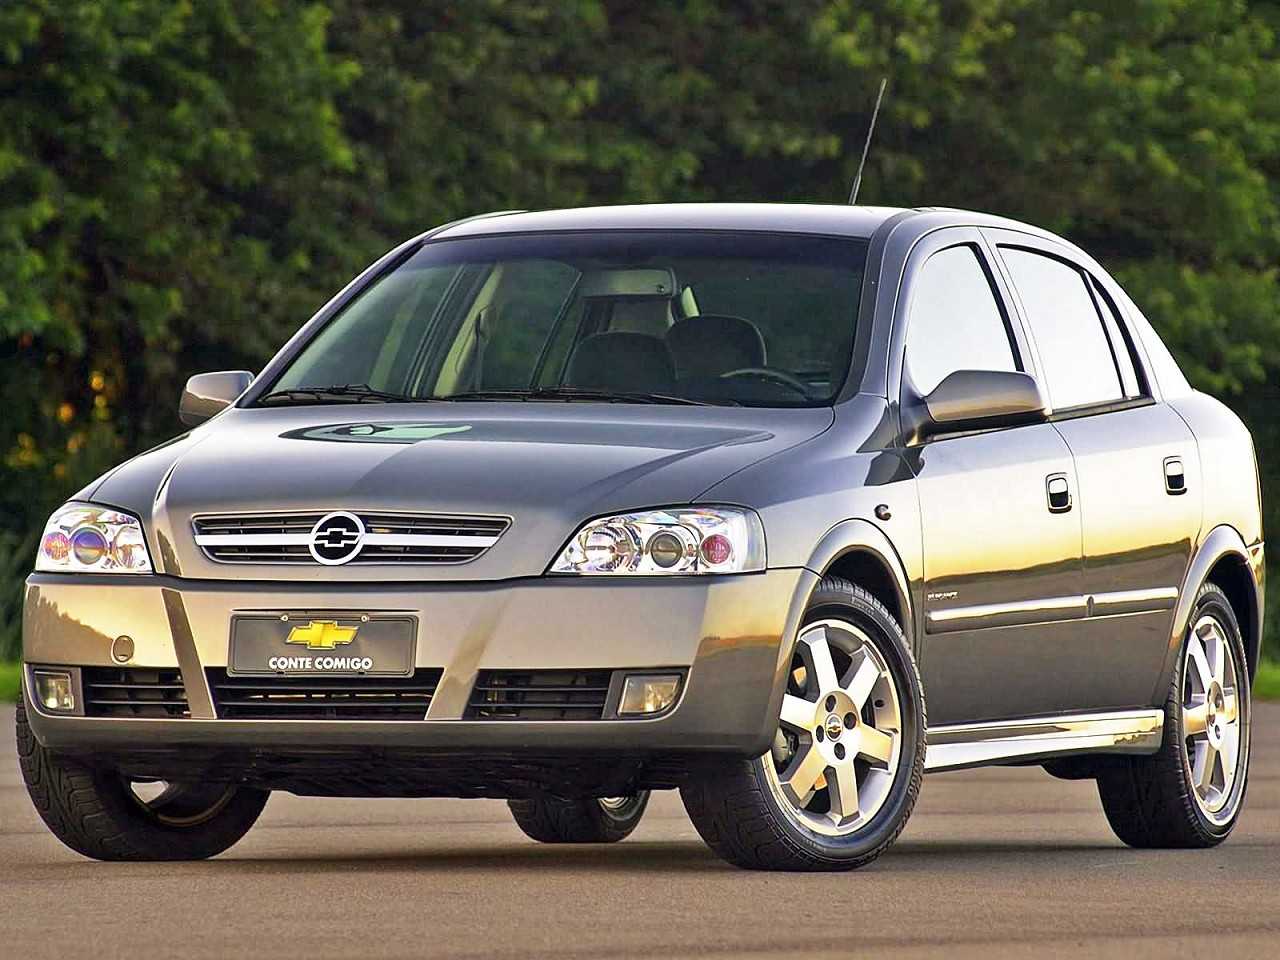 ChevroletAstra Sedan 2010 - ngulo frontal